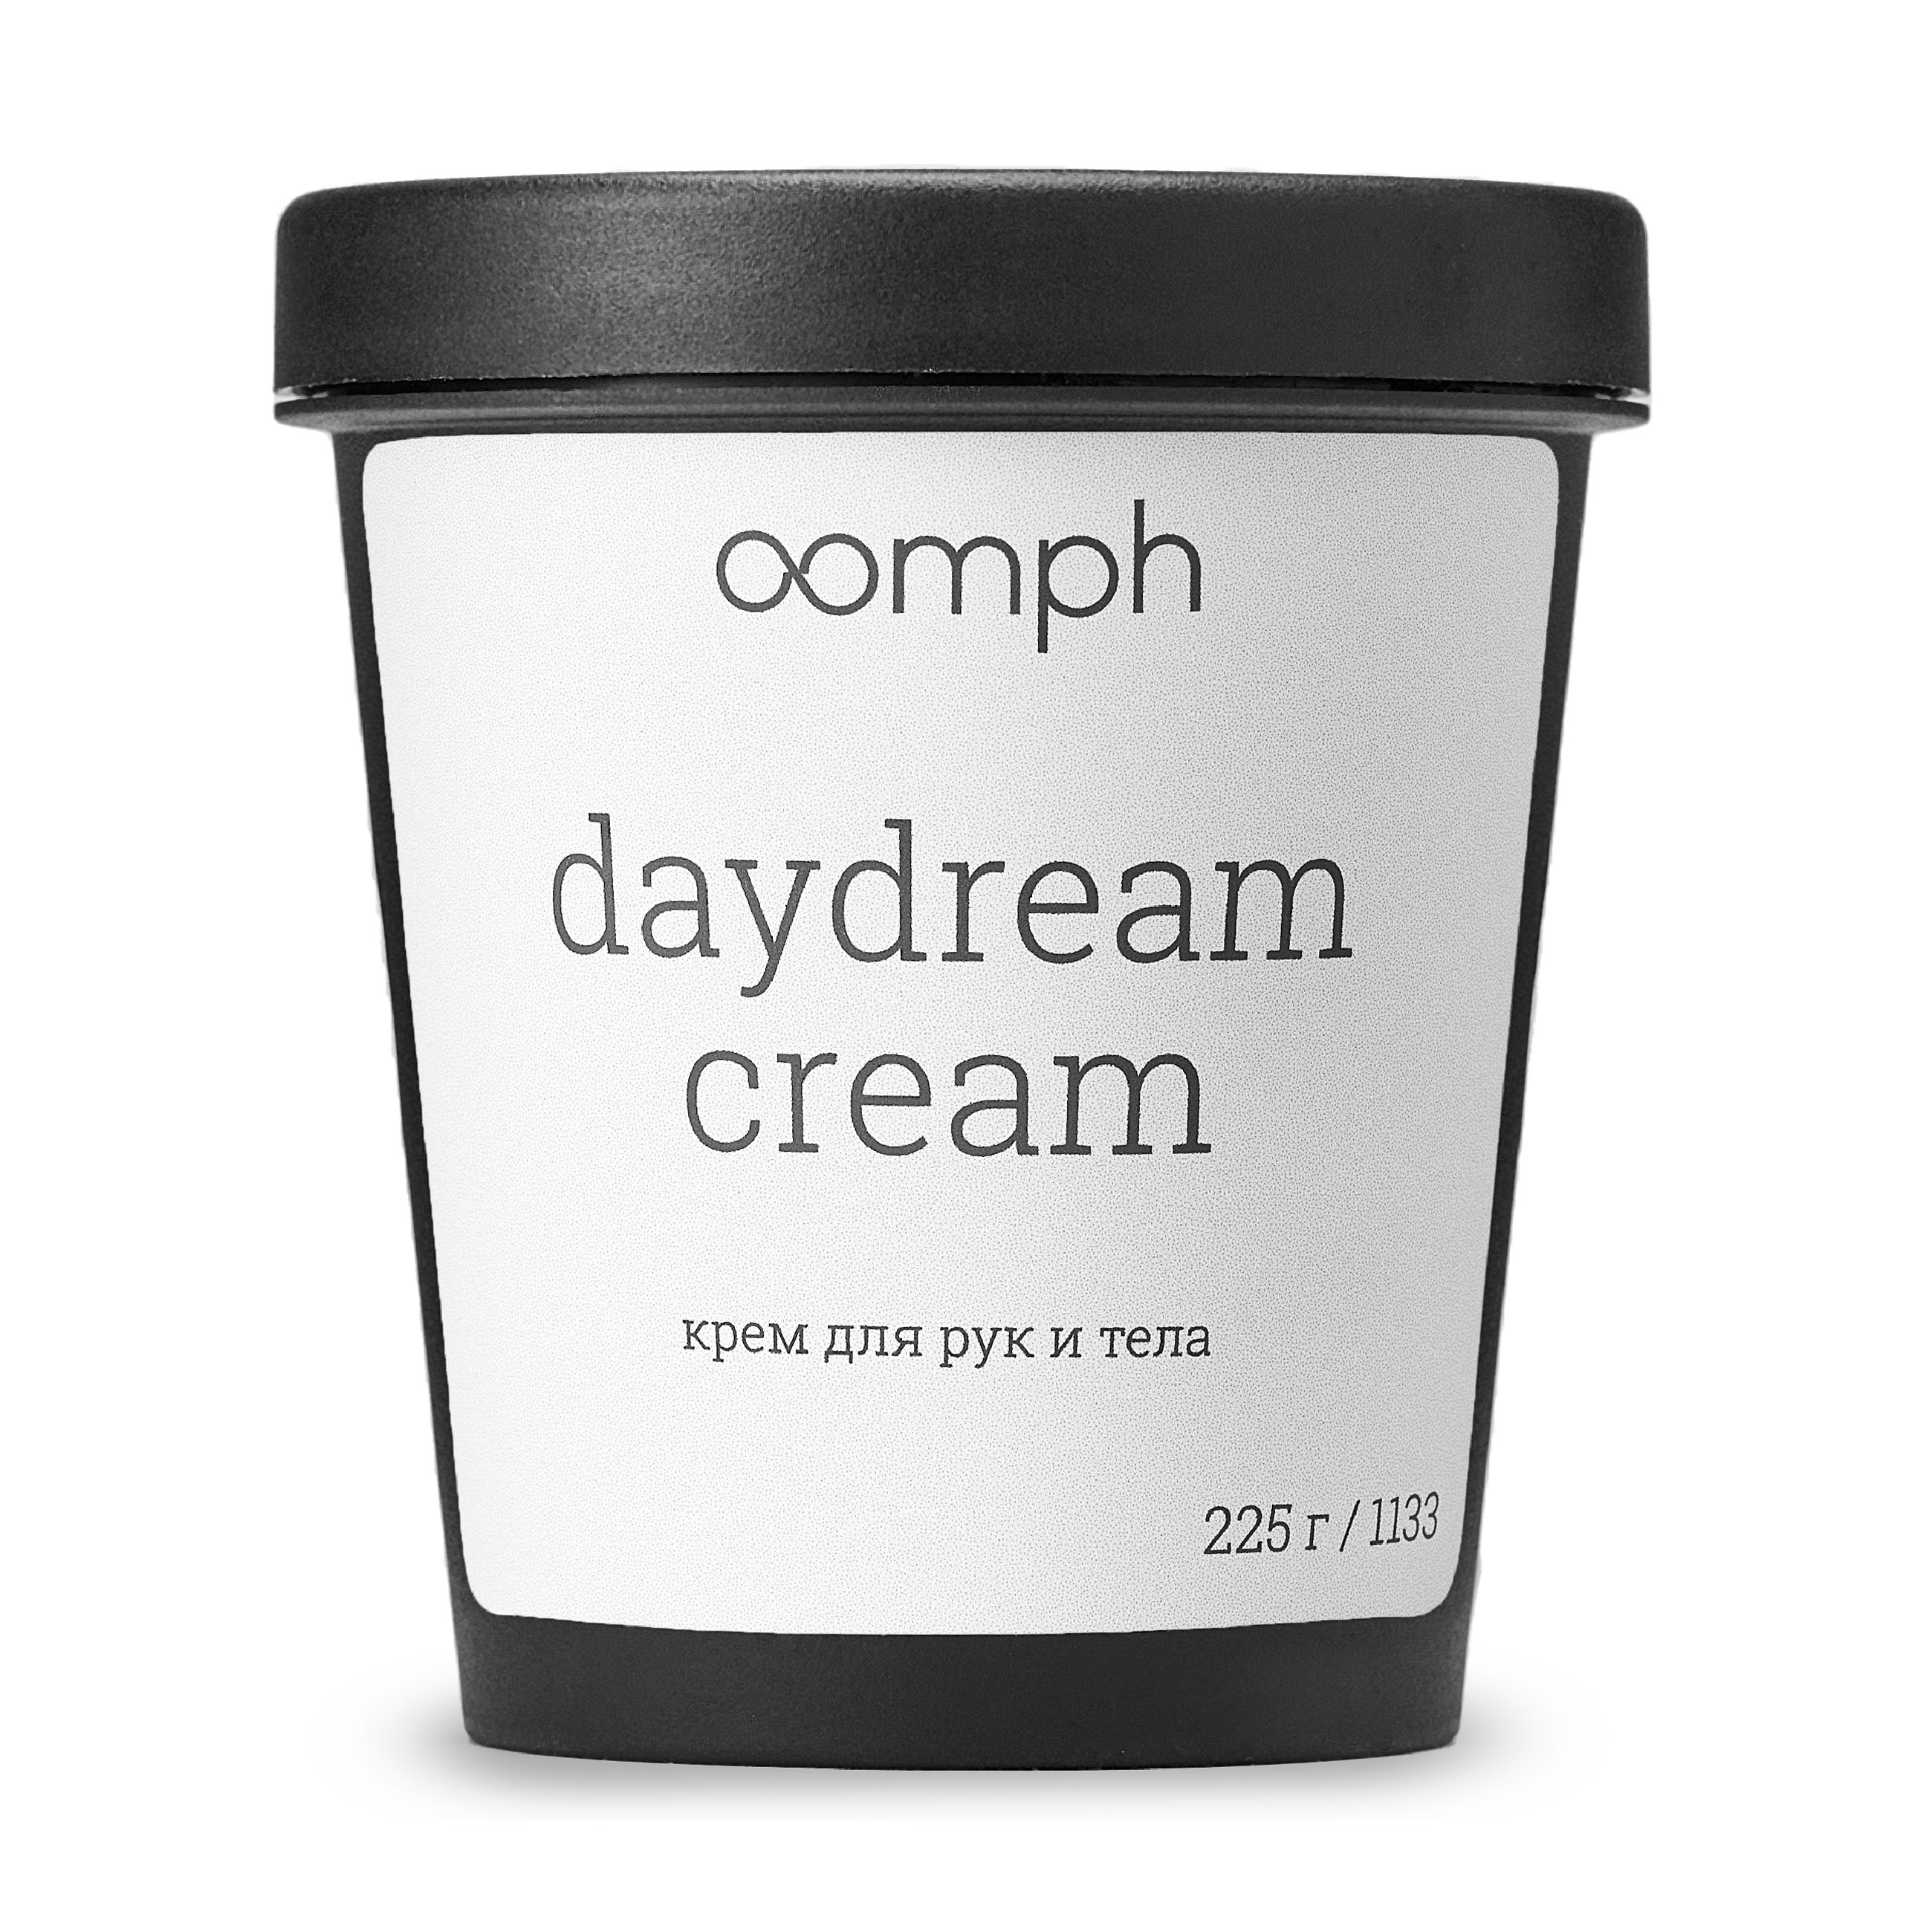 фото Крем для рук и тела oomph daydream cream 225г